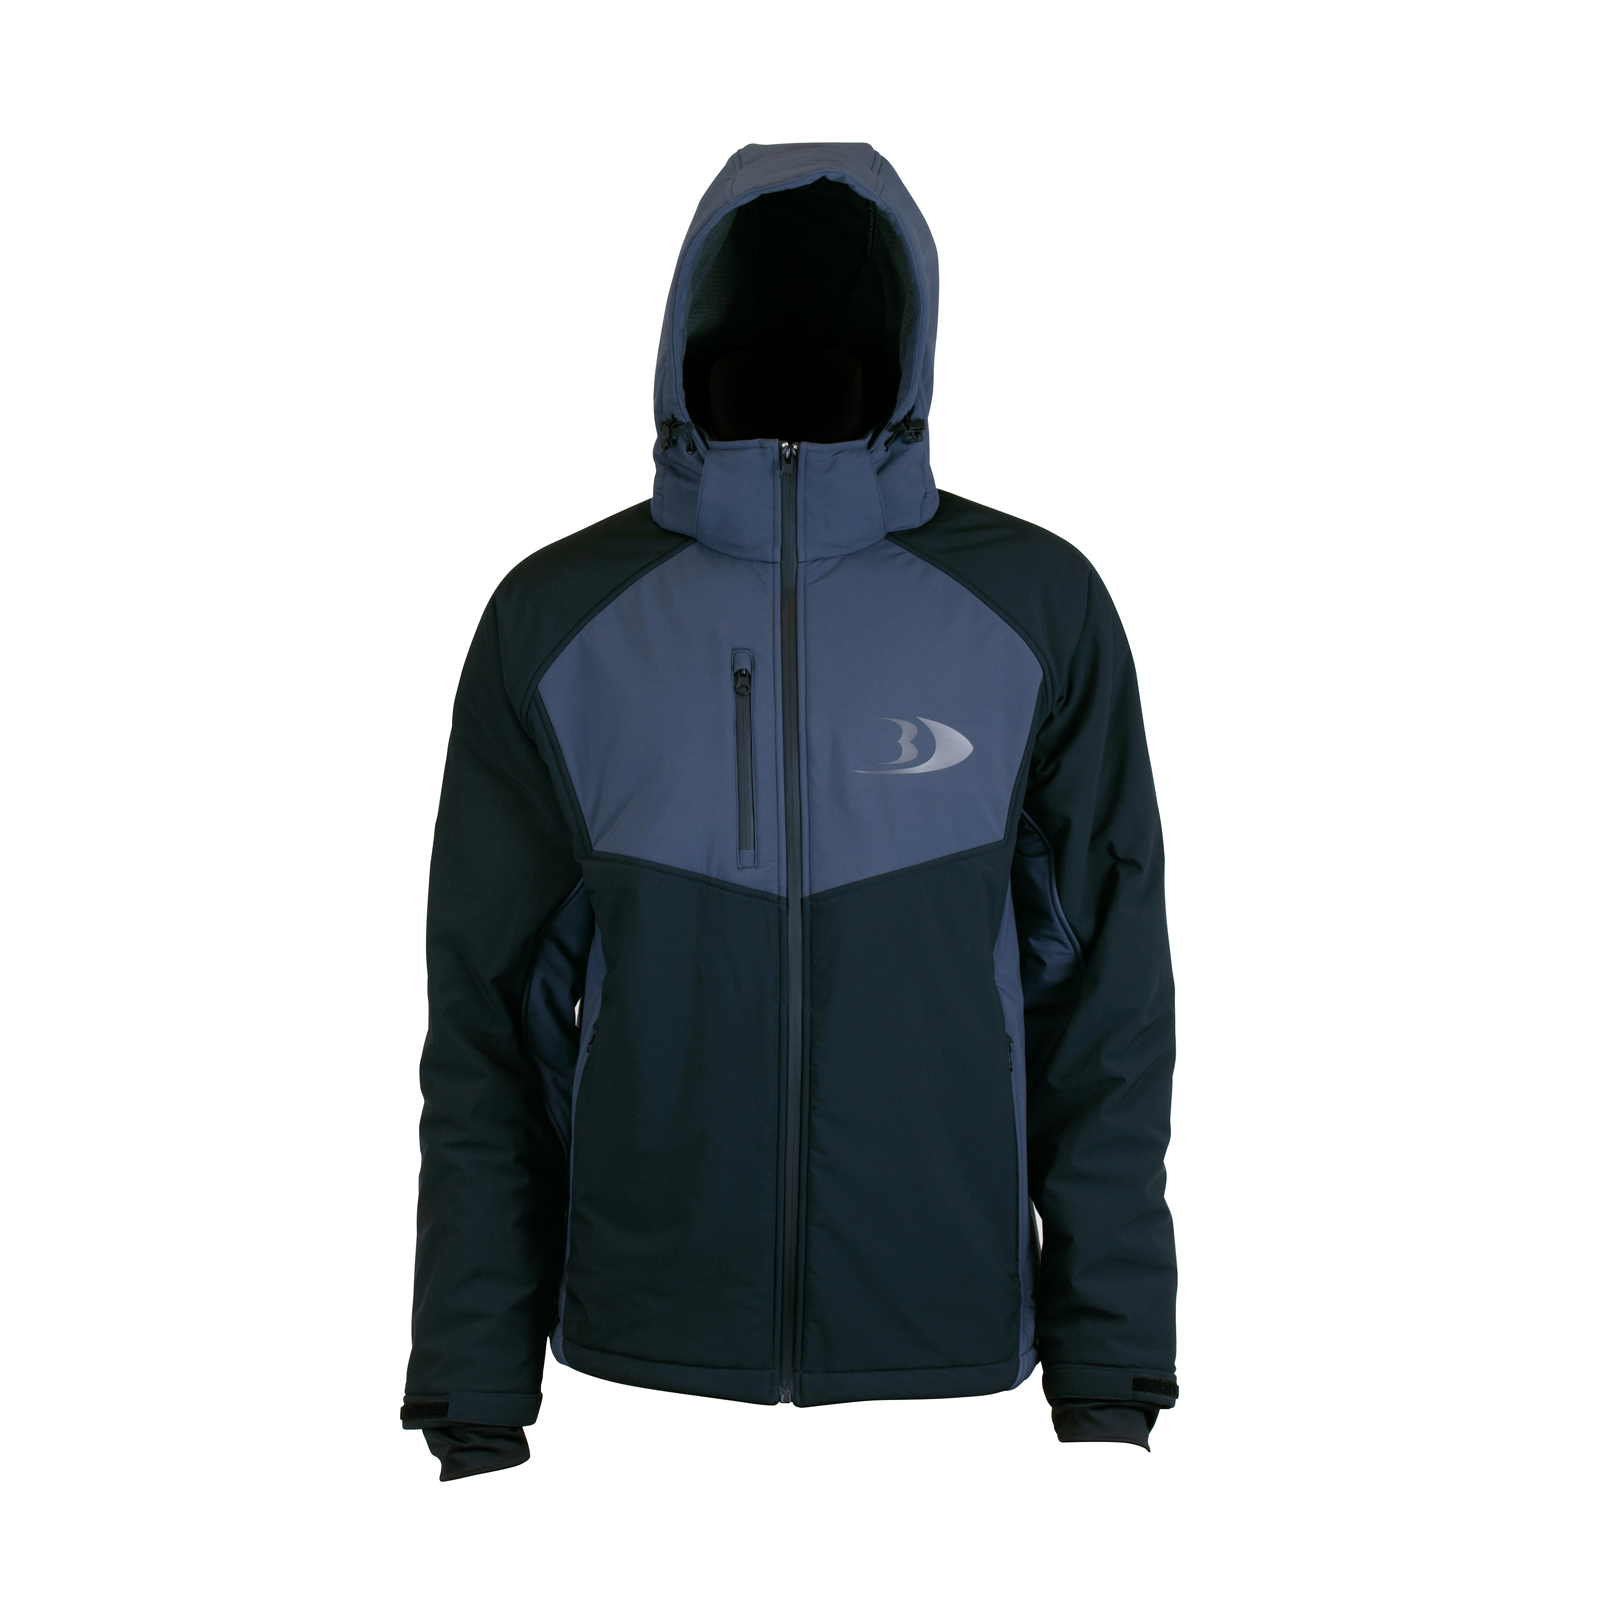 BlackFish Apogee Thermal Softshell Jacket - Black / Slate Blue